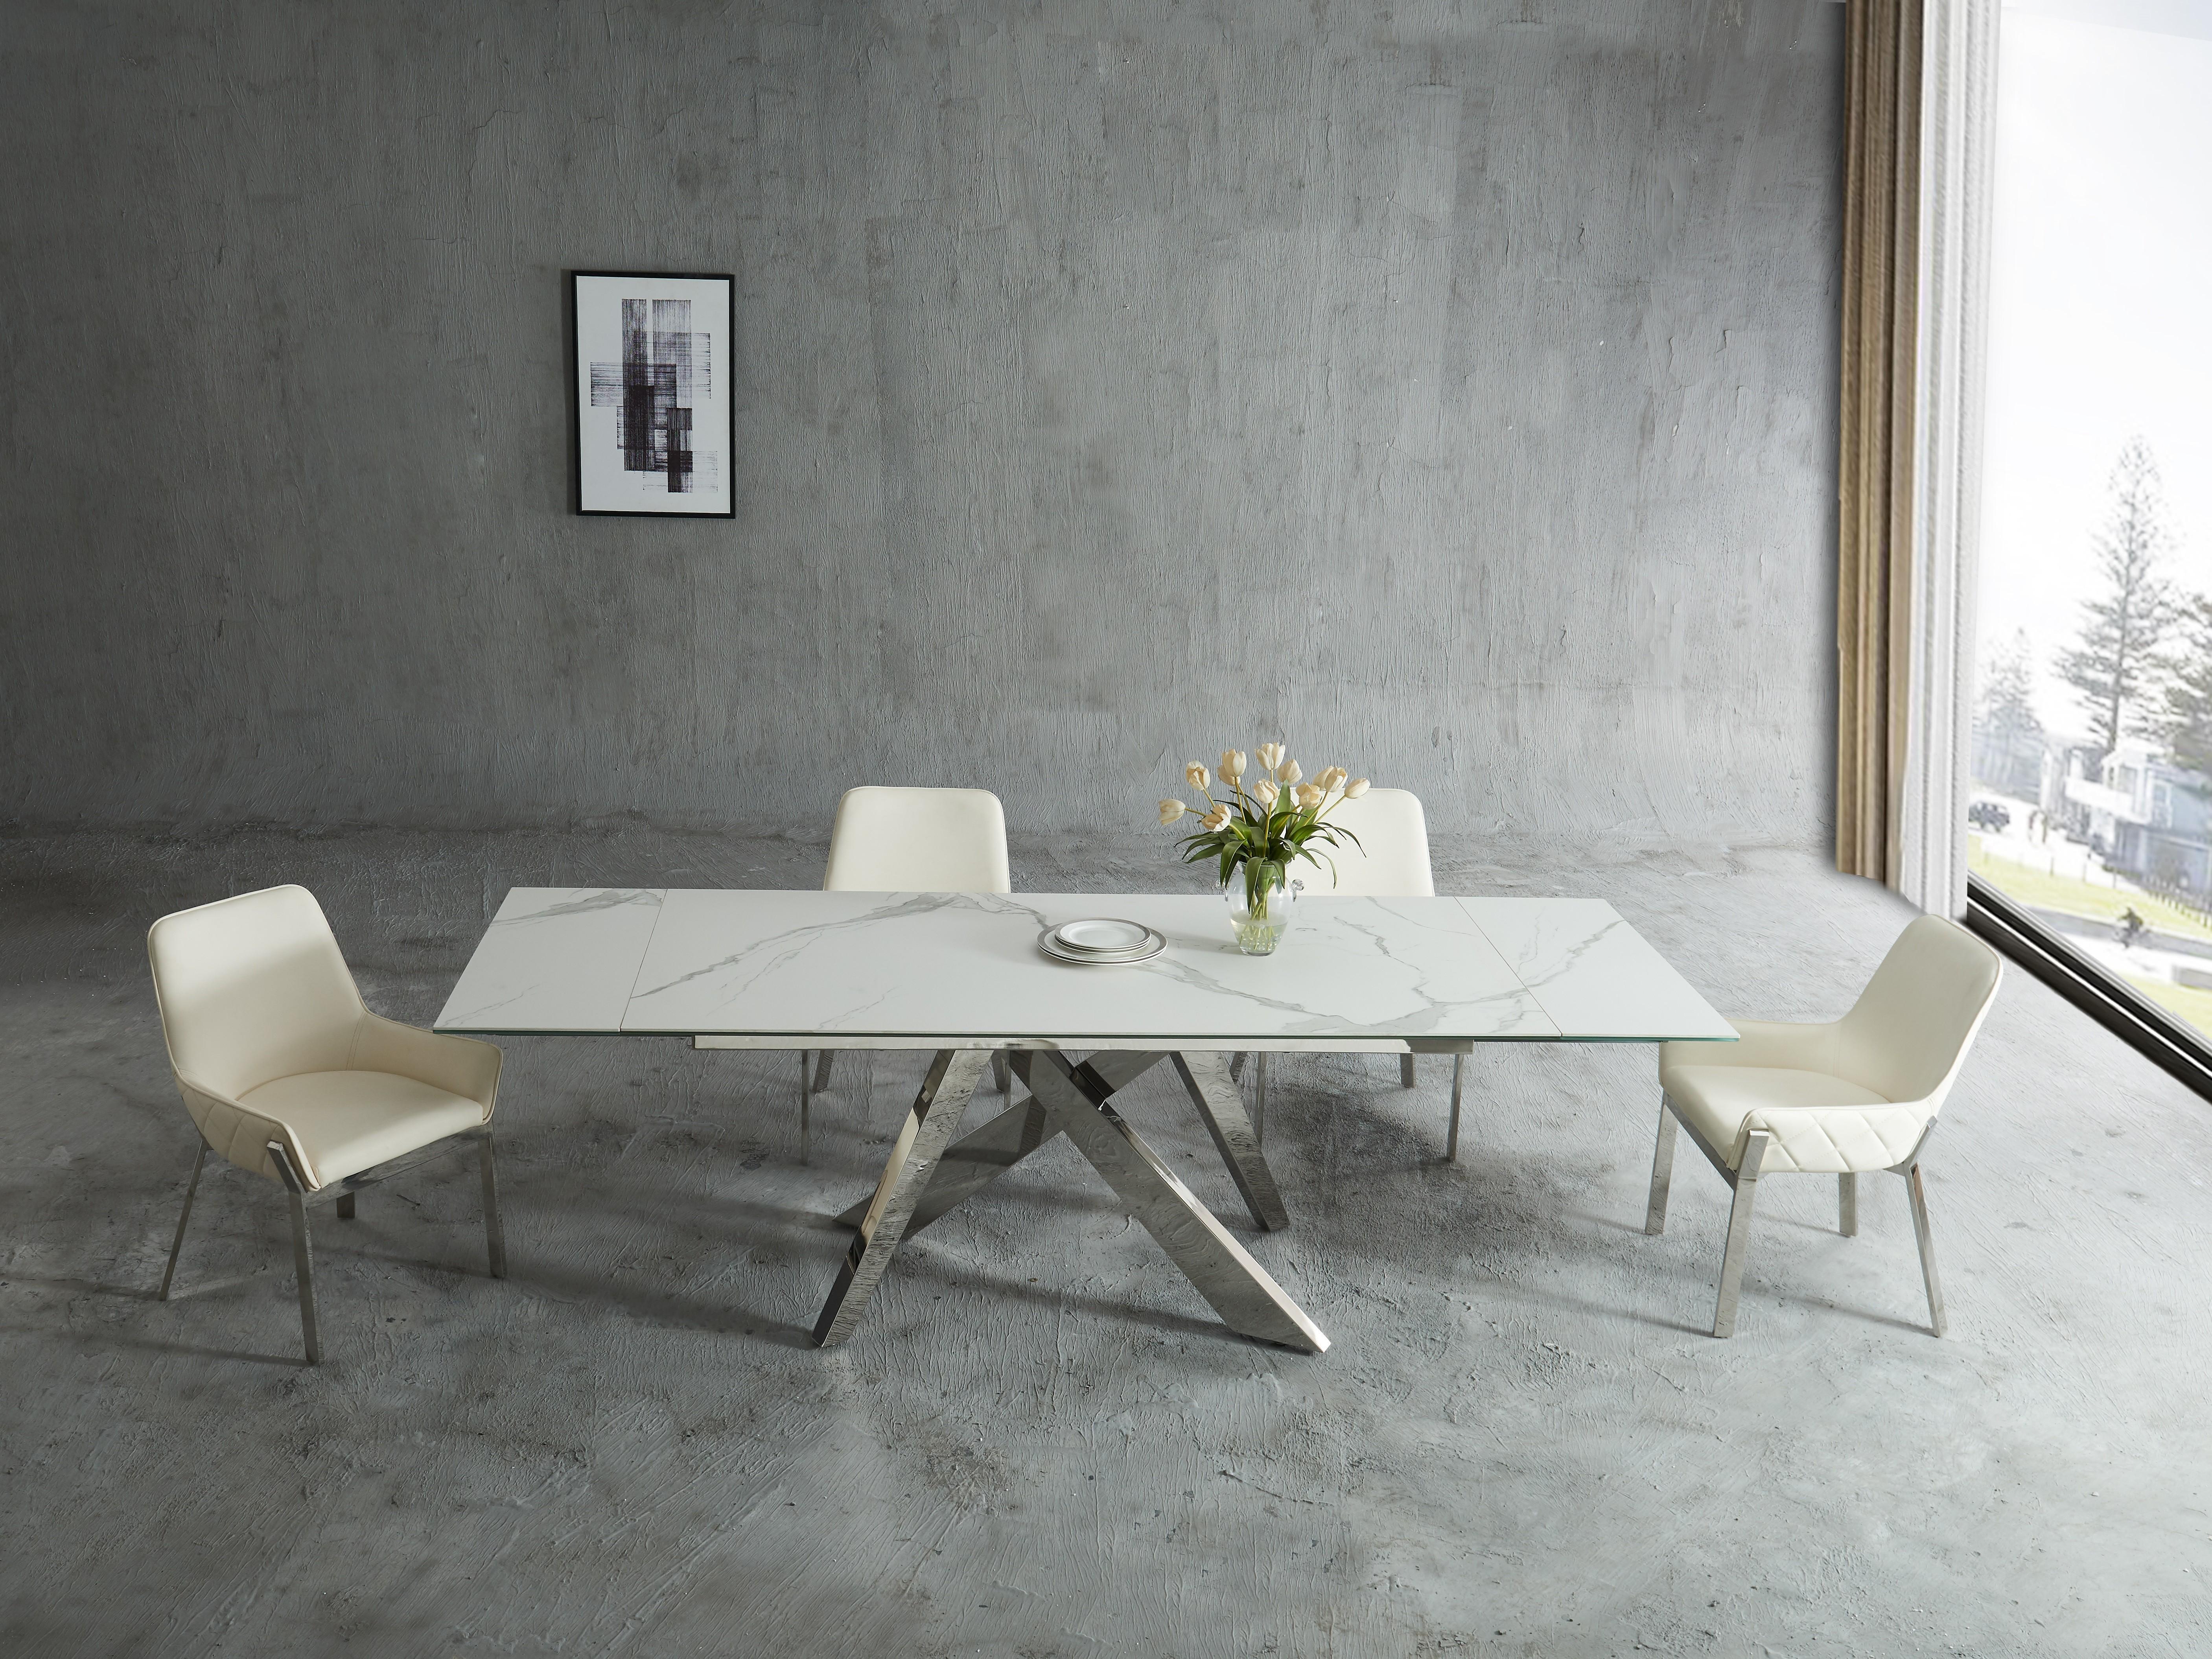 Contemporary, Modern Dining Room Set Carrara Miami 17721-5pcs in Chrome, White Eco Leather